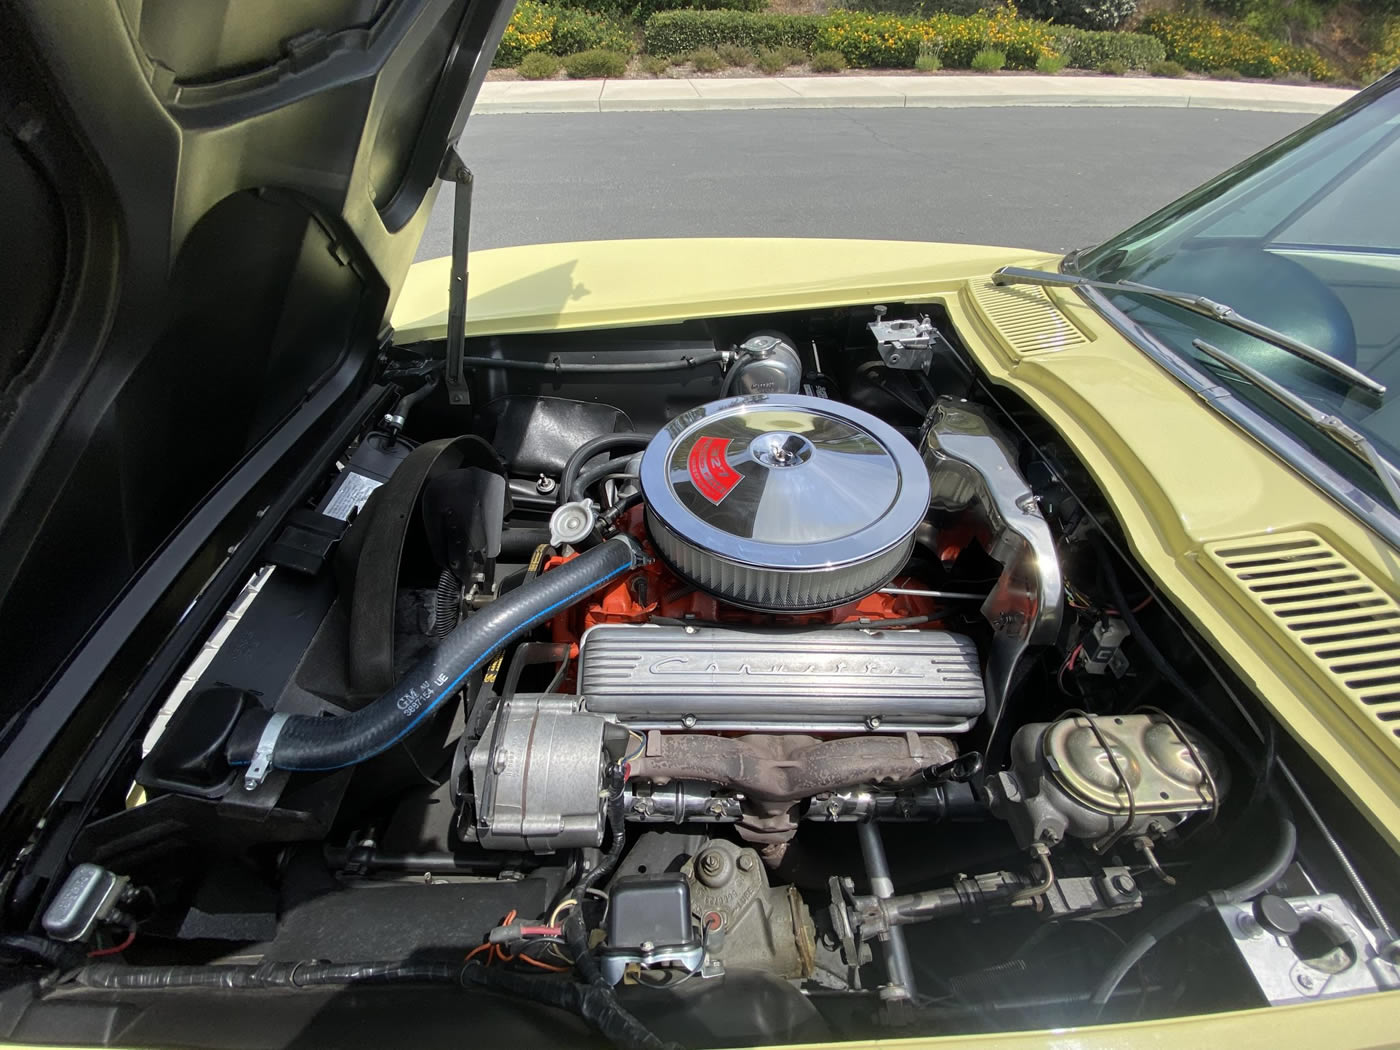 1967 Corvette Coupe L75 327/300 4-Speed in Sunfire Yellow